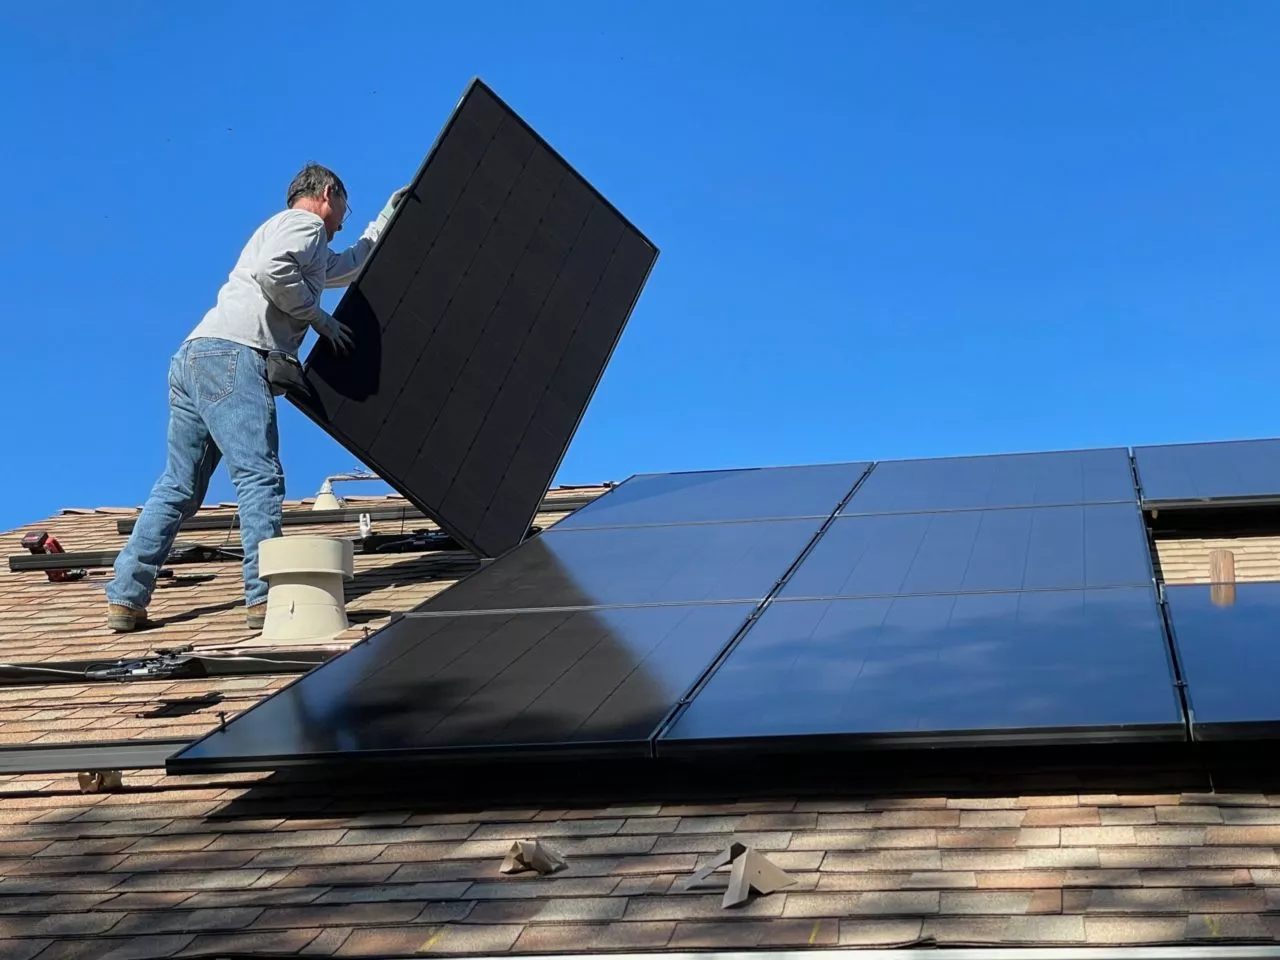 Solar panels installed on slanted roof.